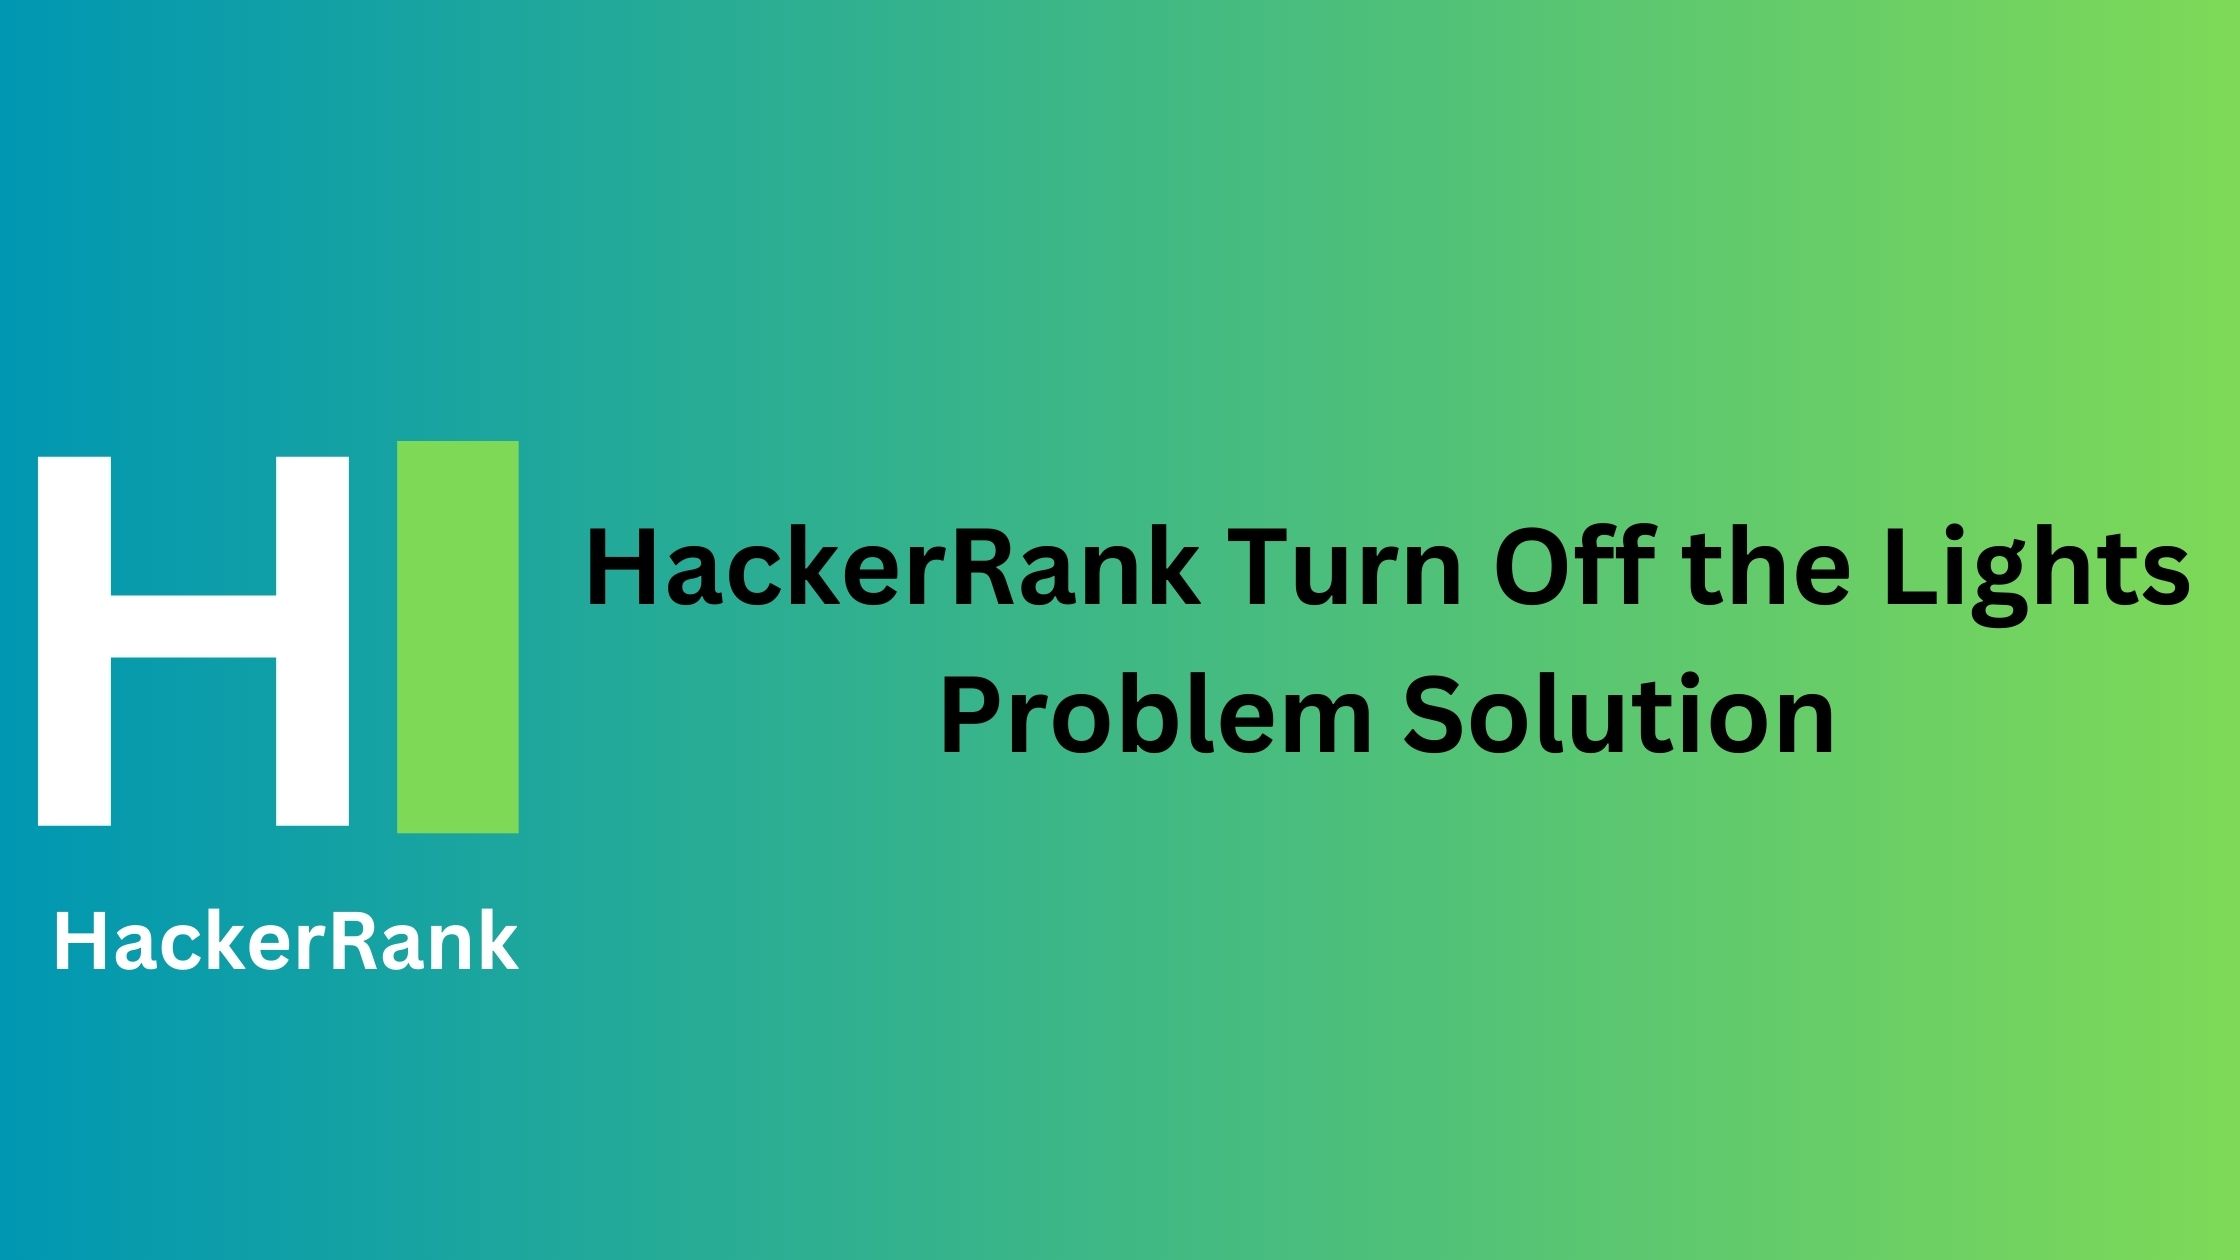 HackerRank Turn Off the Lights Problem Solution